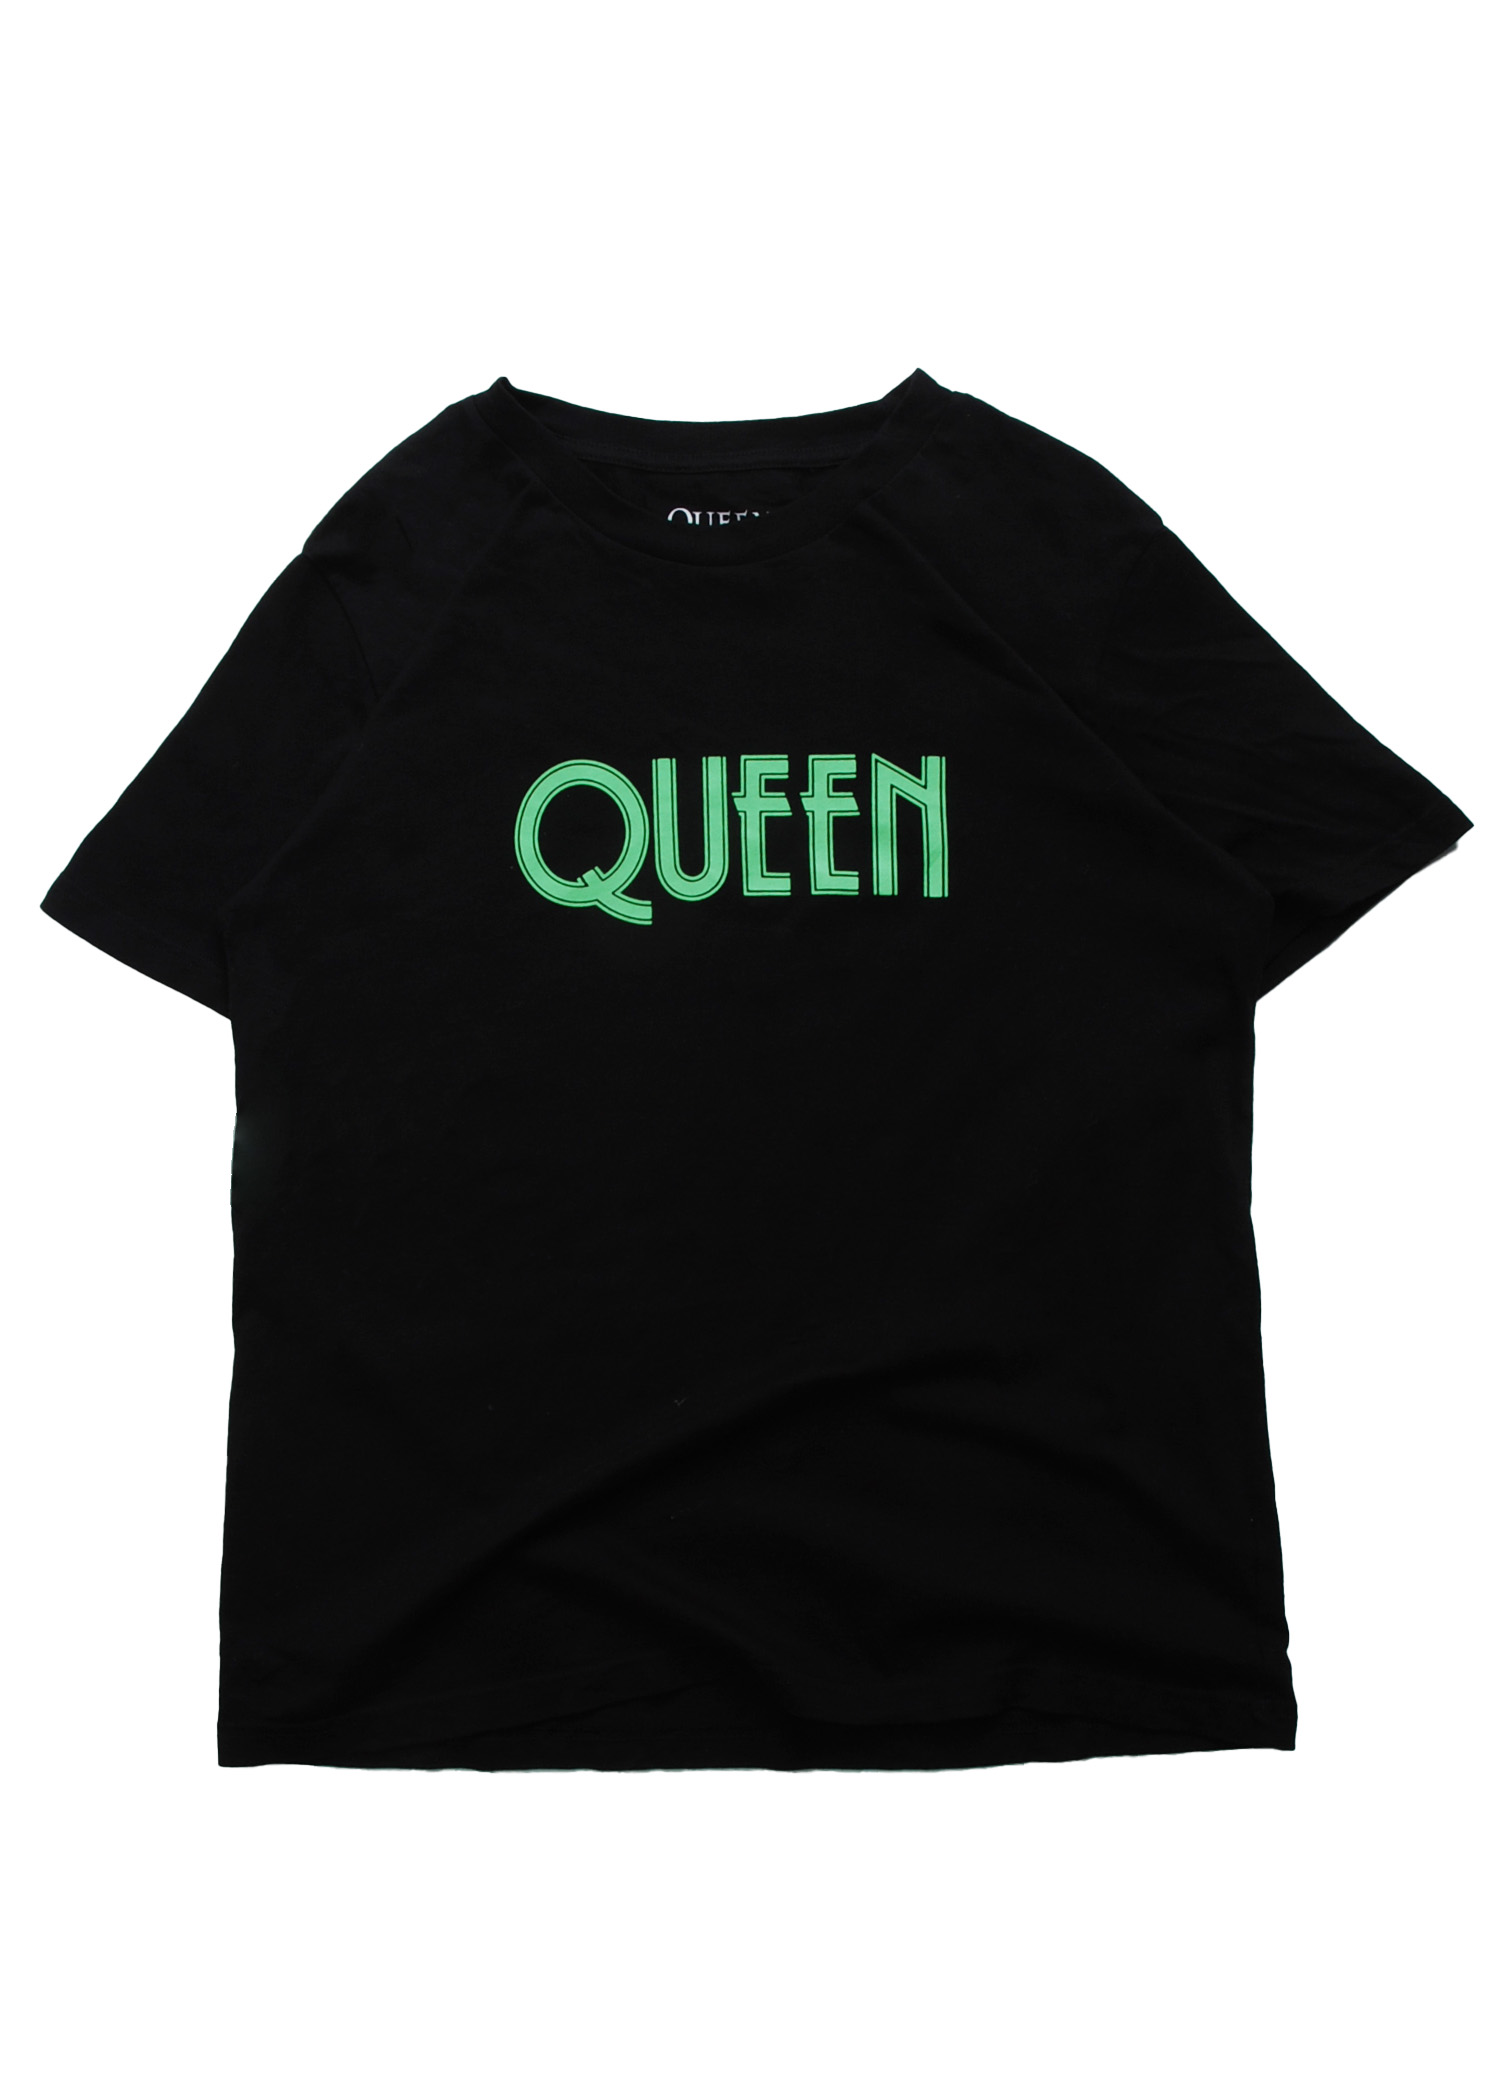 Queen tour t-shirts